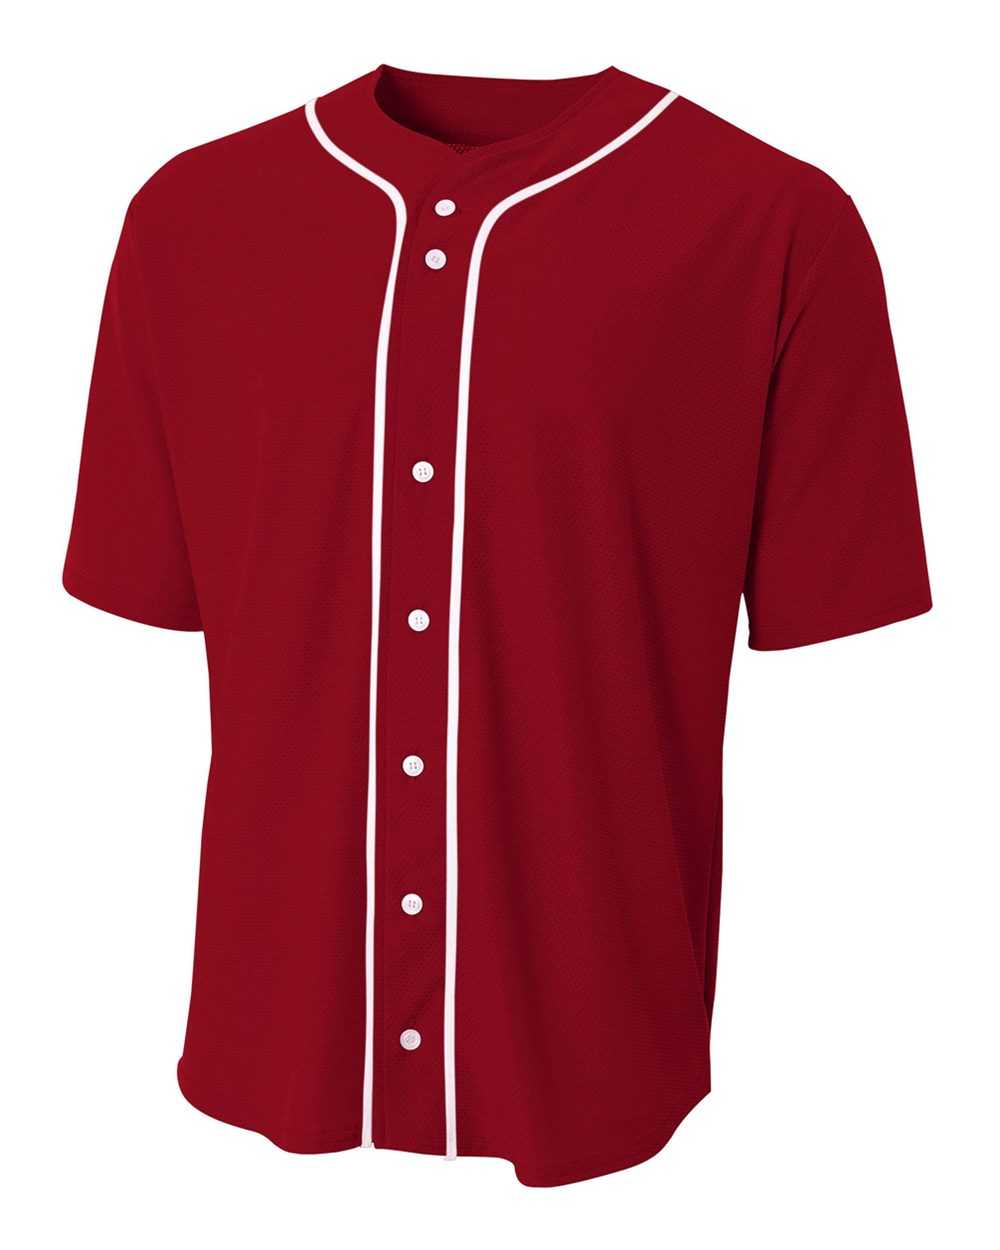 A4 N4184 Short Sleeve Full Button Baseball Top - Cardinal White - HIT a Double